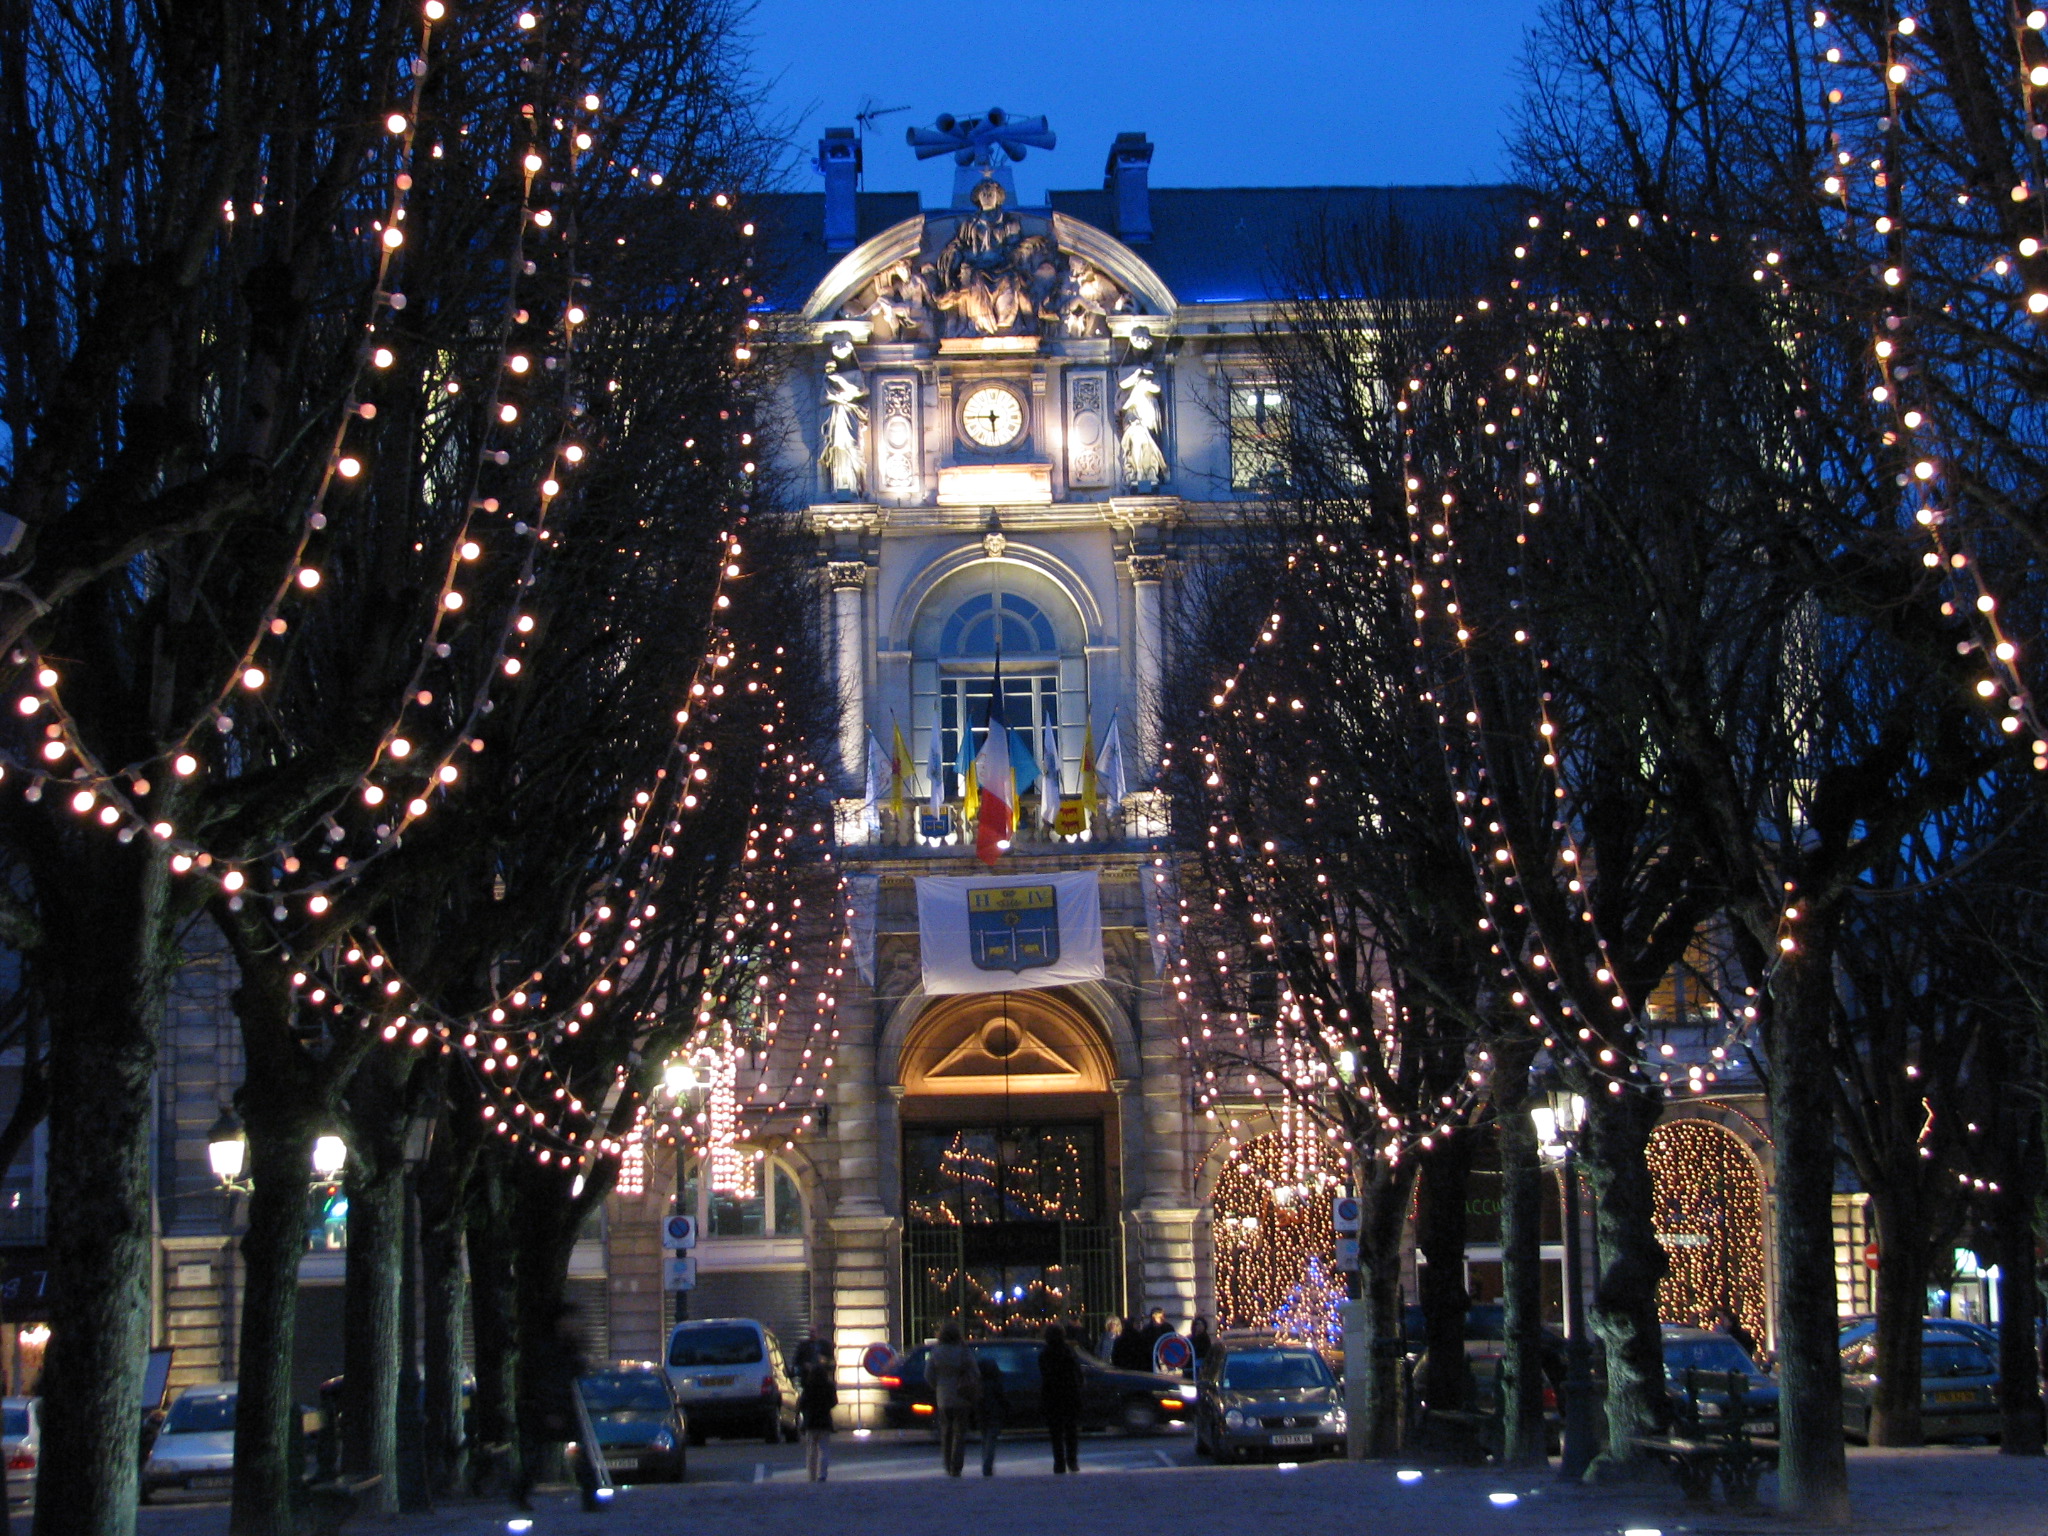 city center on a winter night